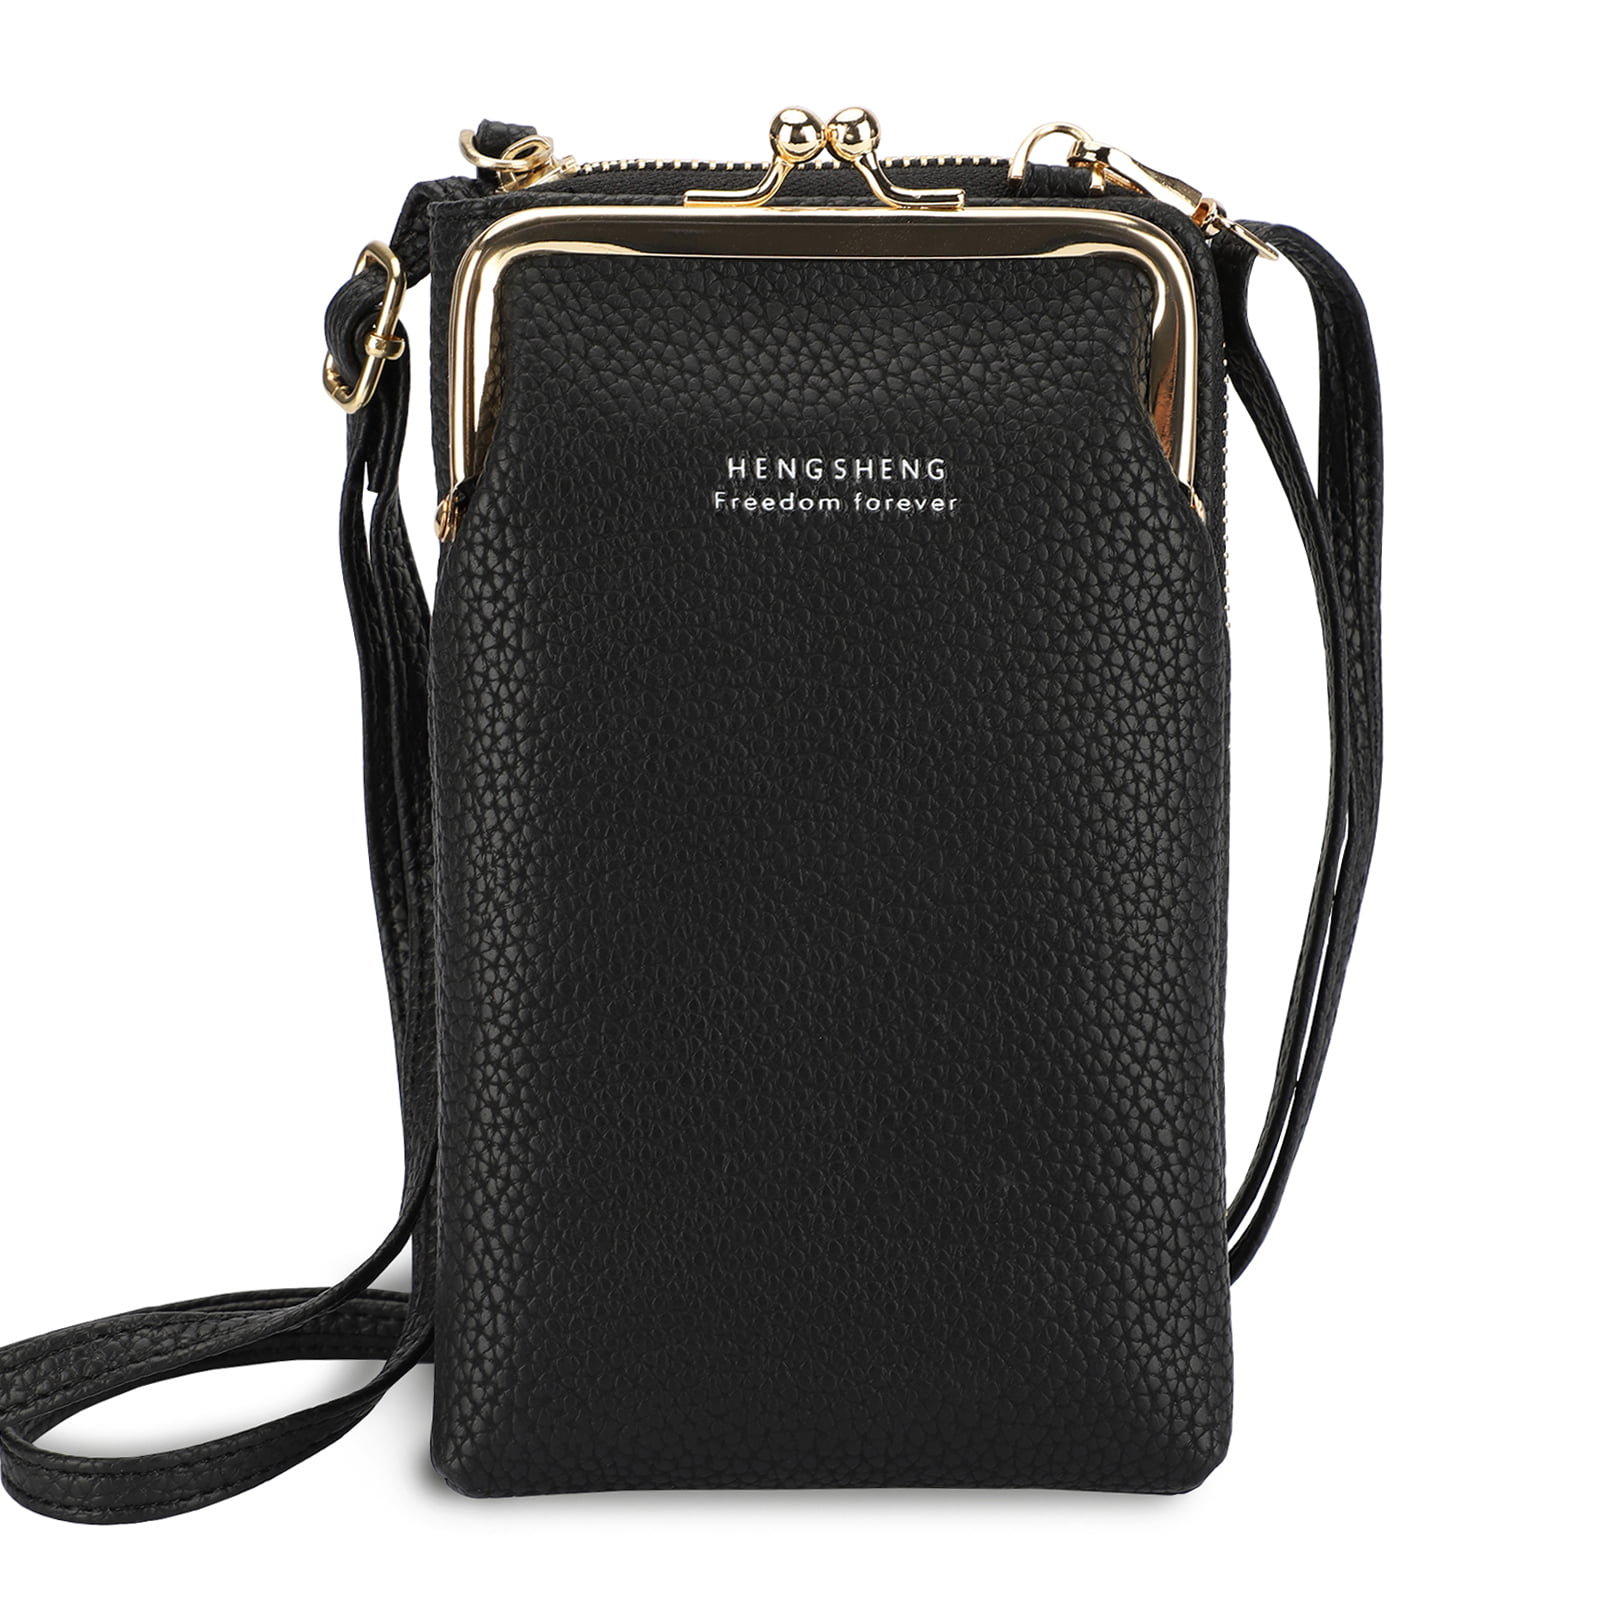 Small Leather Top Handle Handbag Clutch Crossbody Shoulder Bag Tote Messenger Bag Cell Phone Mini Backpack Purse Wallet and Satchel Black 3 in 1 Handbag for Women